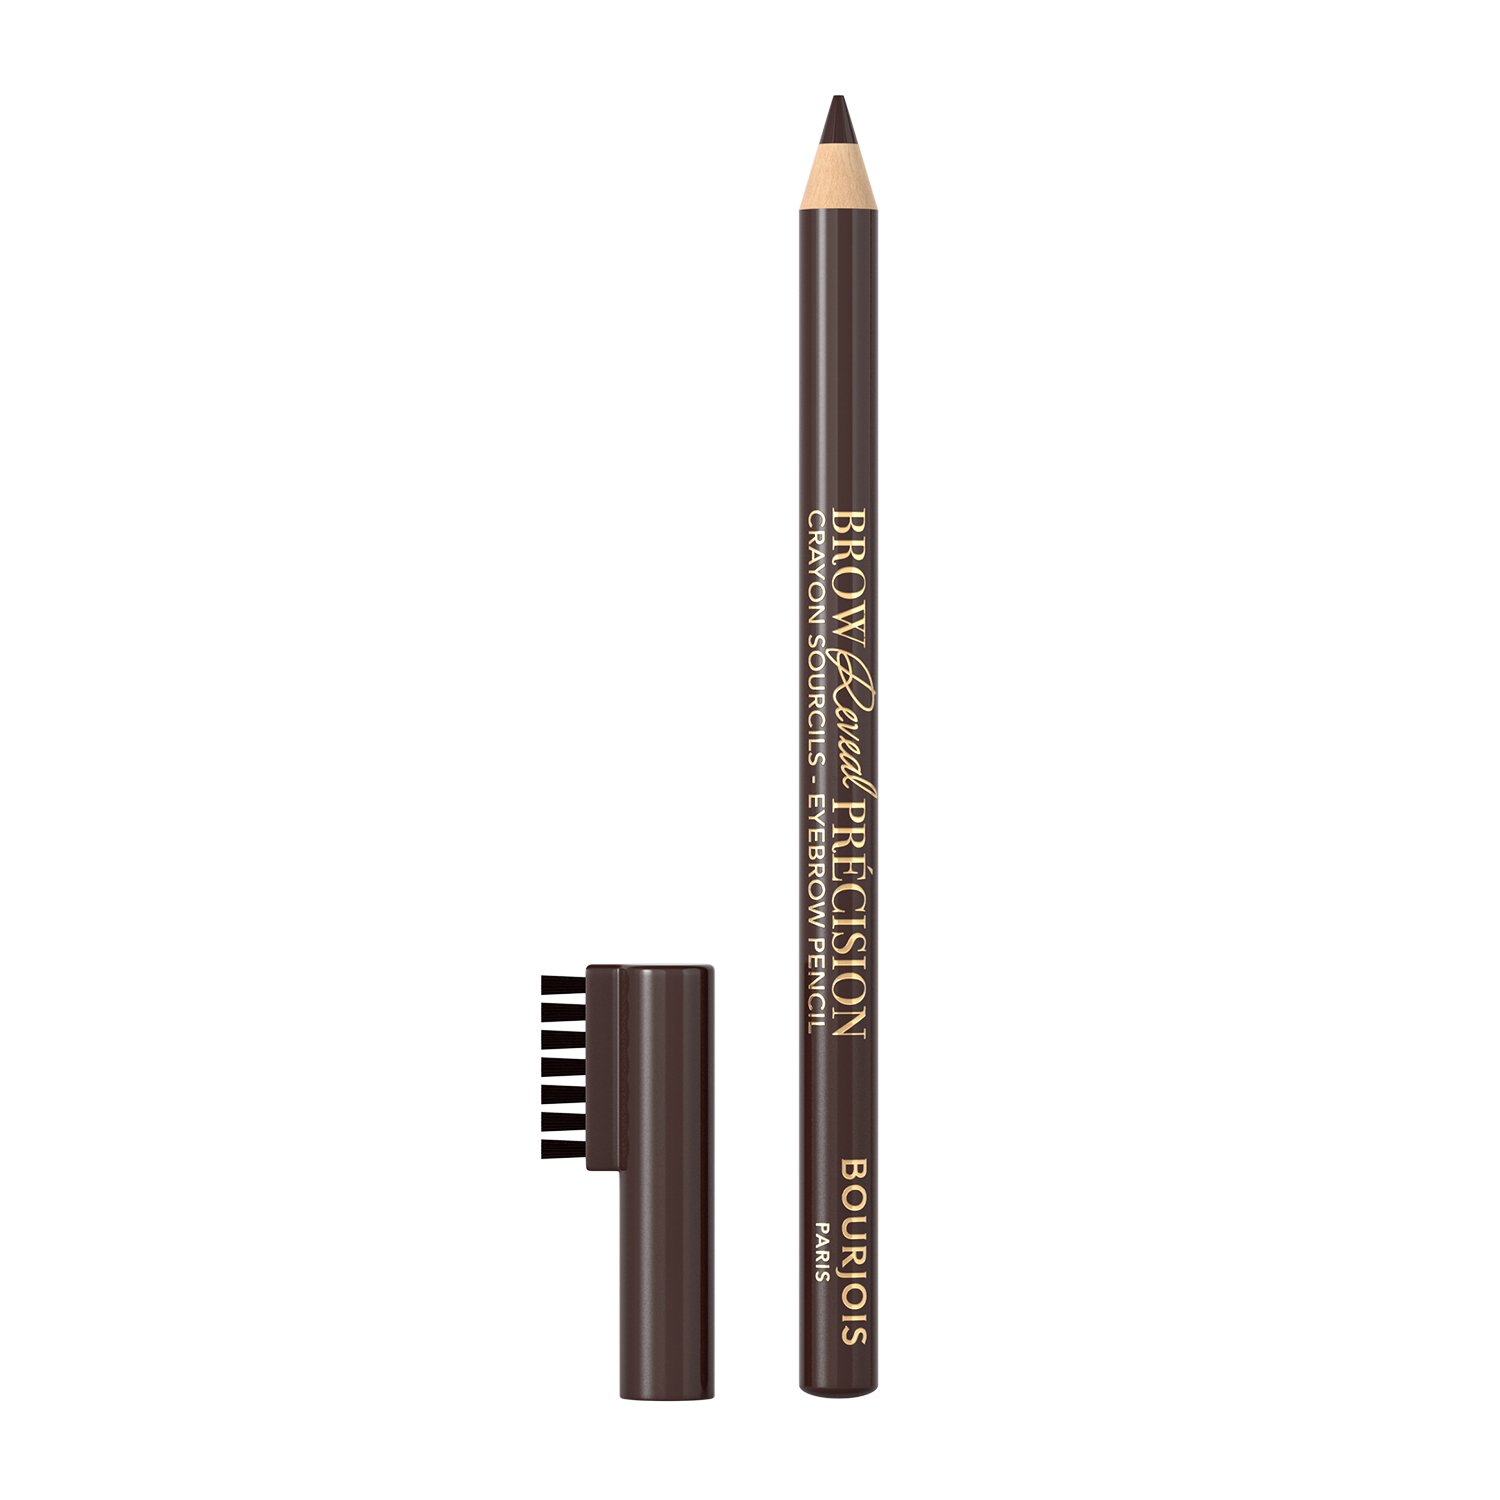 Олівець для брів Bourjois Brow Reveal Precision Dark Brunette тон 004, 1.4 г (8000019760402) - фото 2